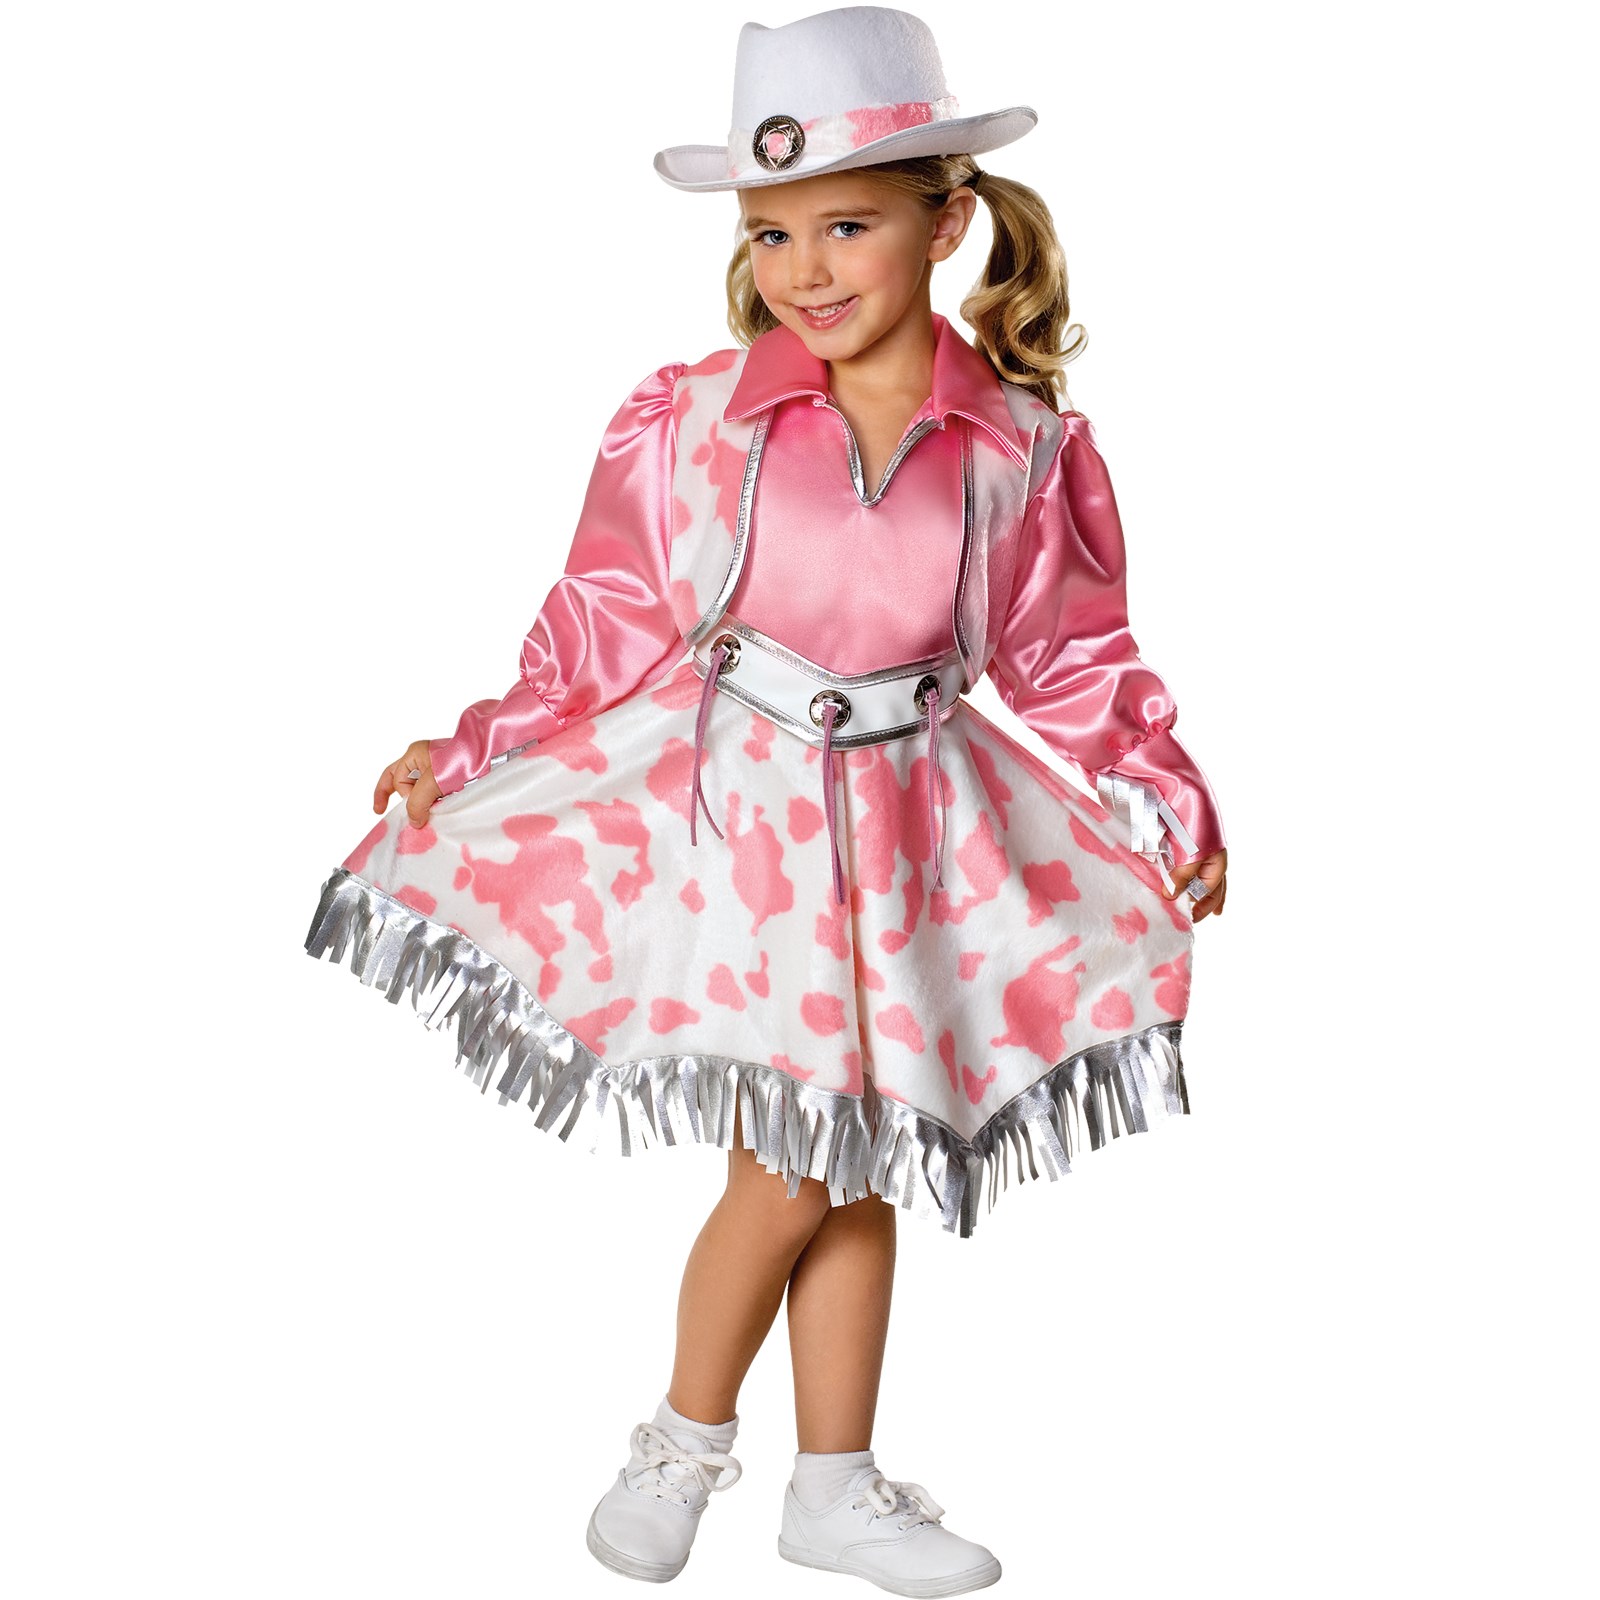 Western Diva Toddler / Child Costume